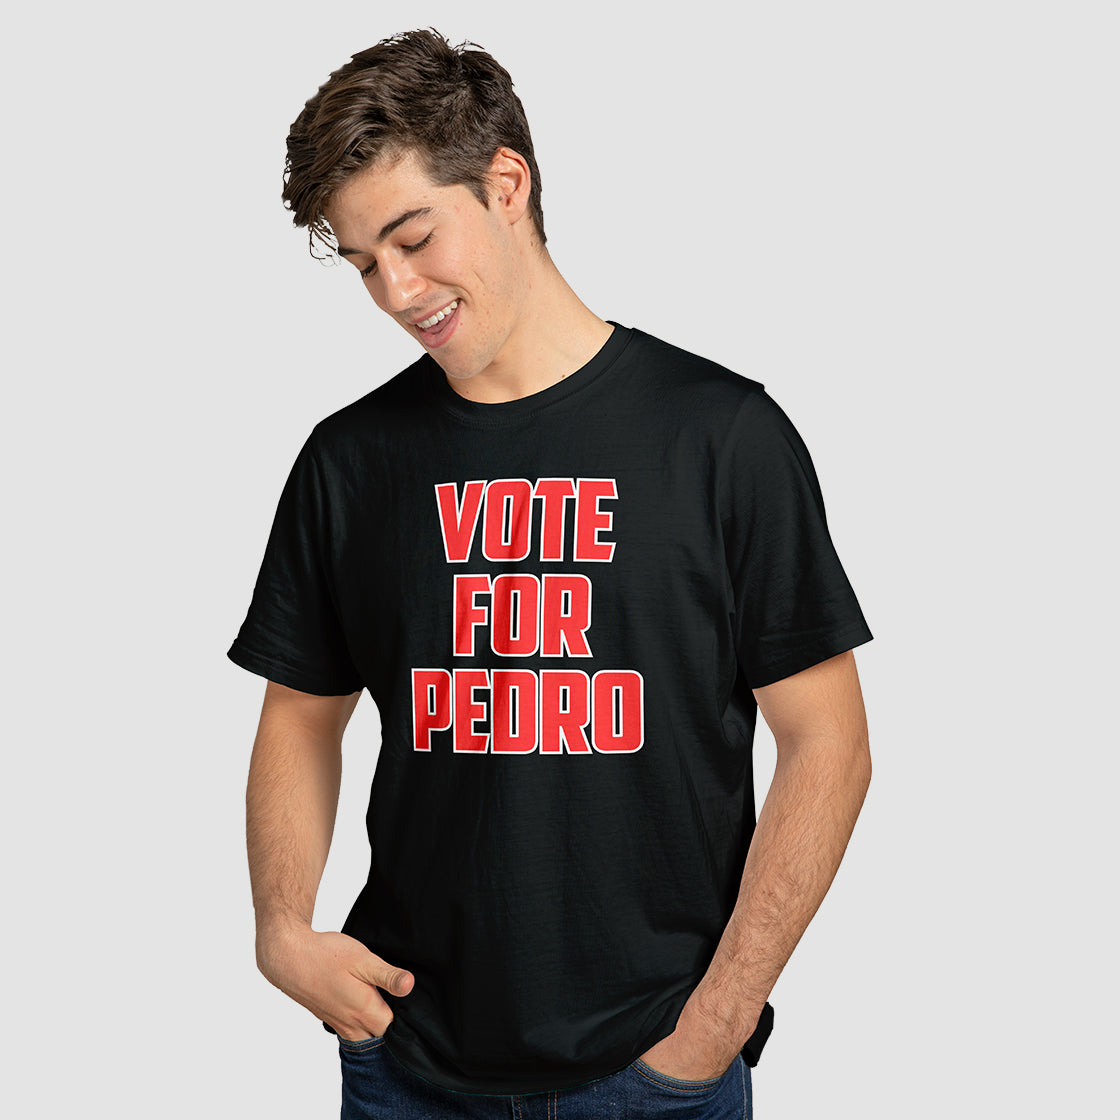 "Vote for Pedro" T-Shirt